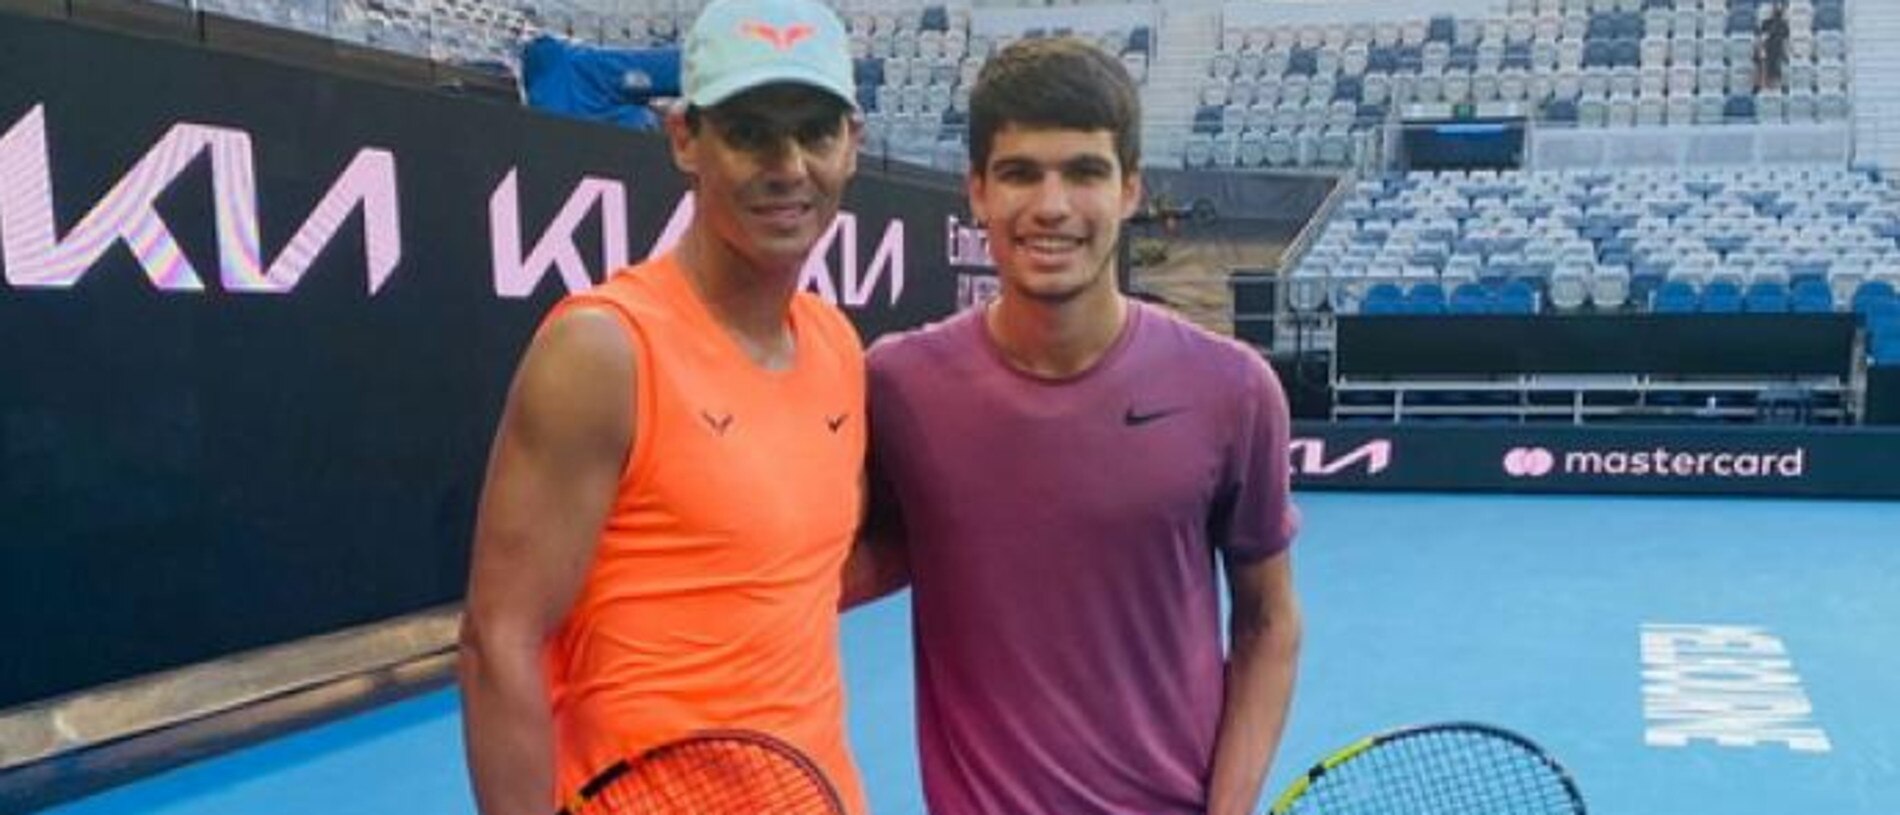 Australian Open 2021, tennis news: Carlos Alcaraz, Rafael Nadal successor,  Toni Nadal comments, 17-year-old tennis prodigy, Juan Carlos Ferrero